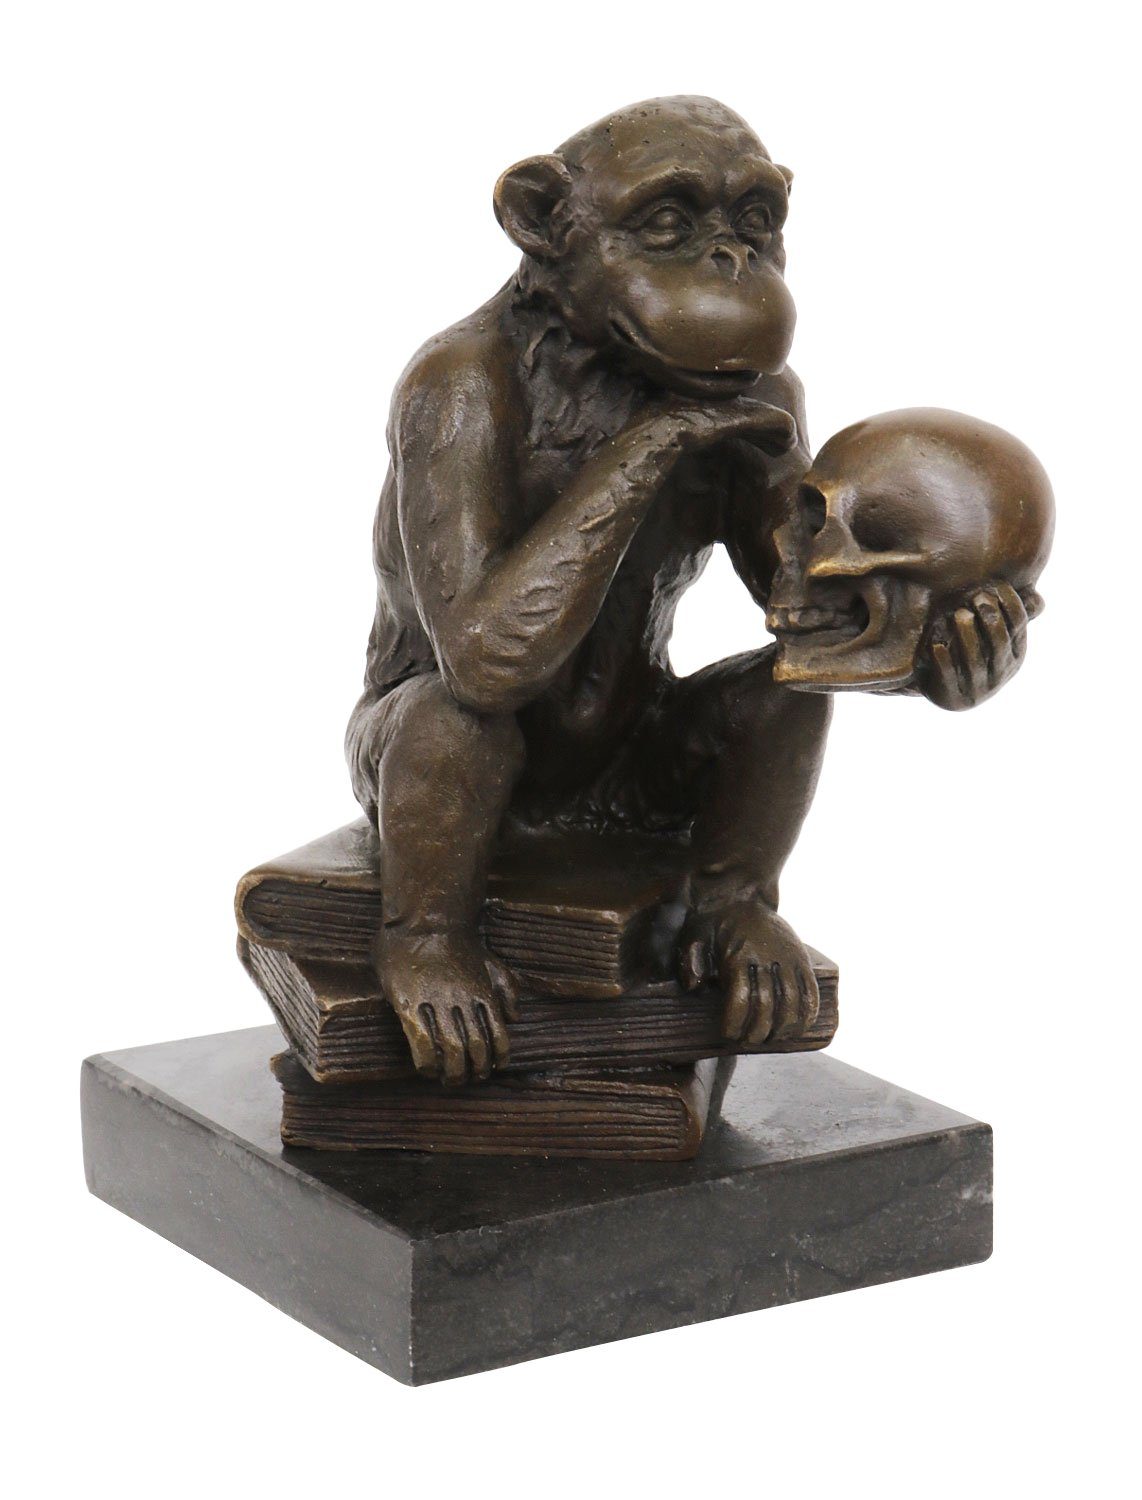 Aubaho Skulptur Bronzeskulptur Affe Totenkopf Schädel Bronze Darwin Statue Bronzefigur